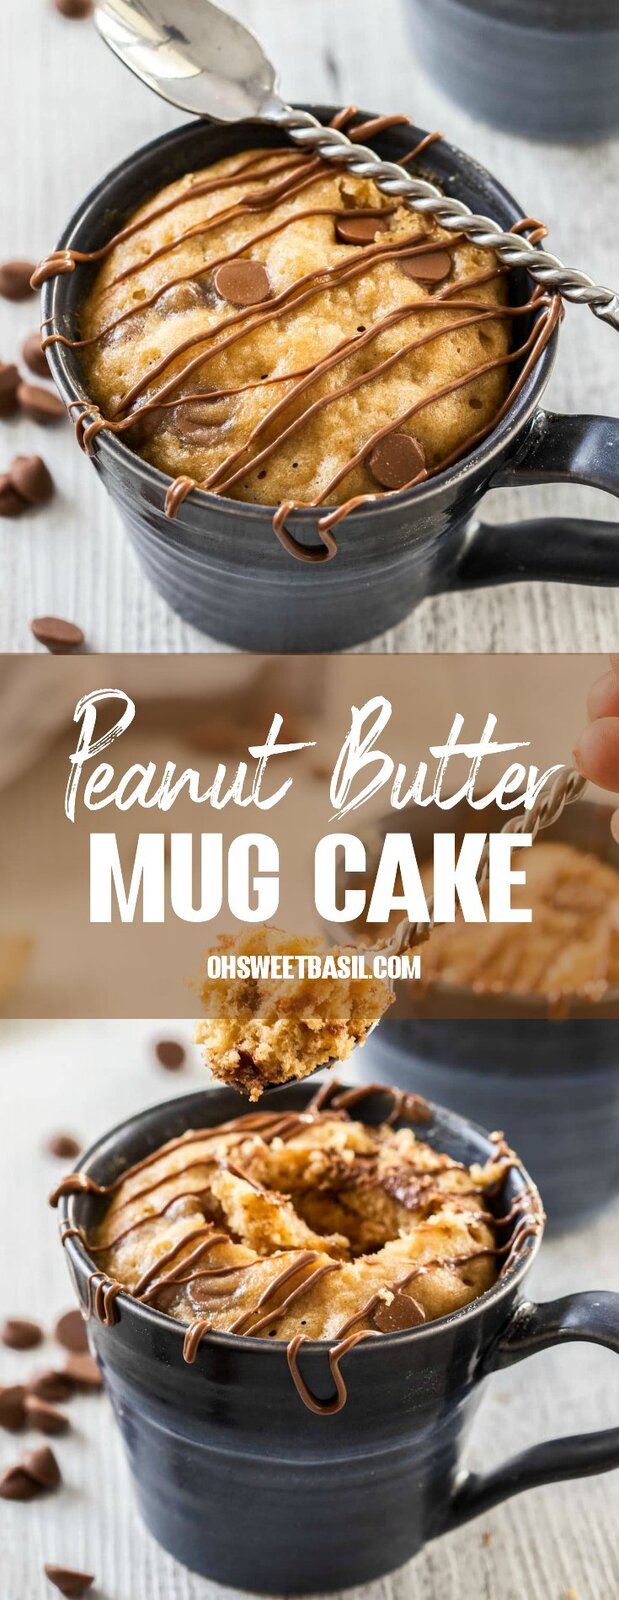 Peanut-butter-mug-cake-ohsweetbasil.com1_.jpg